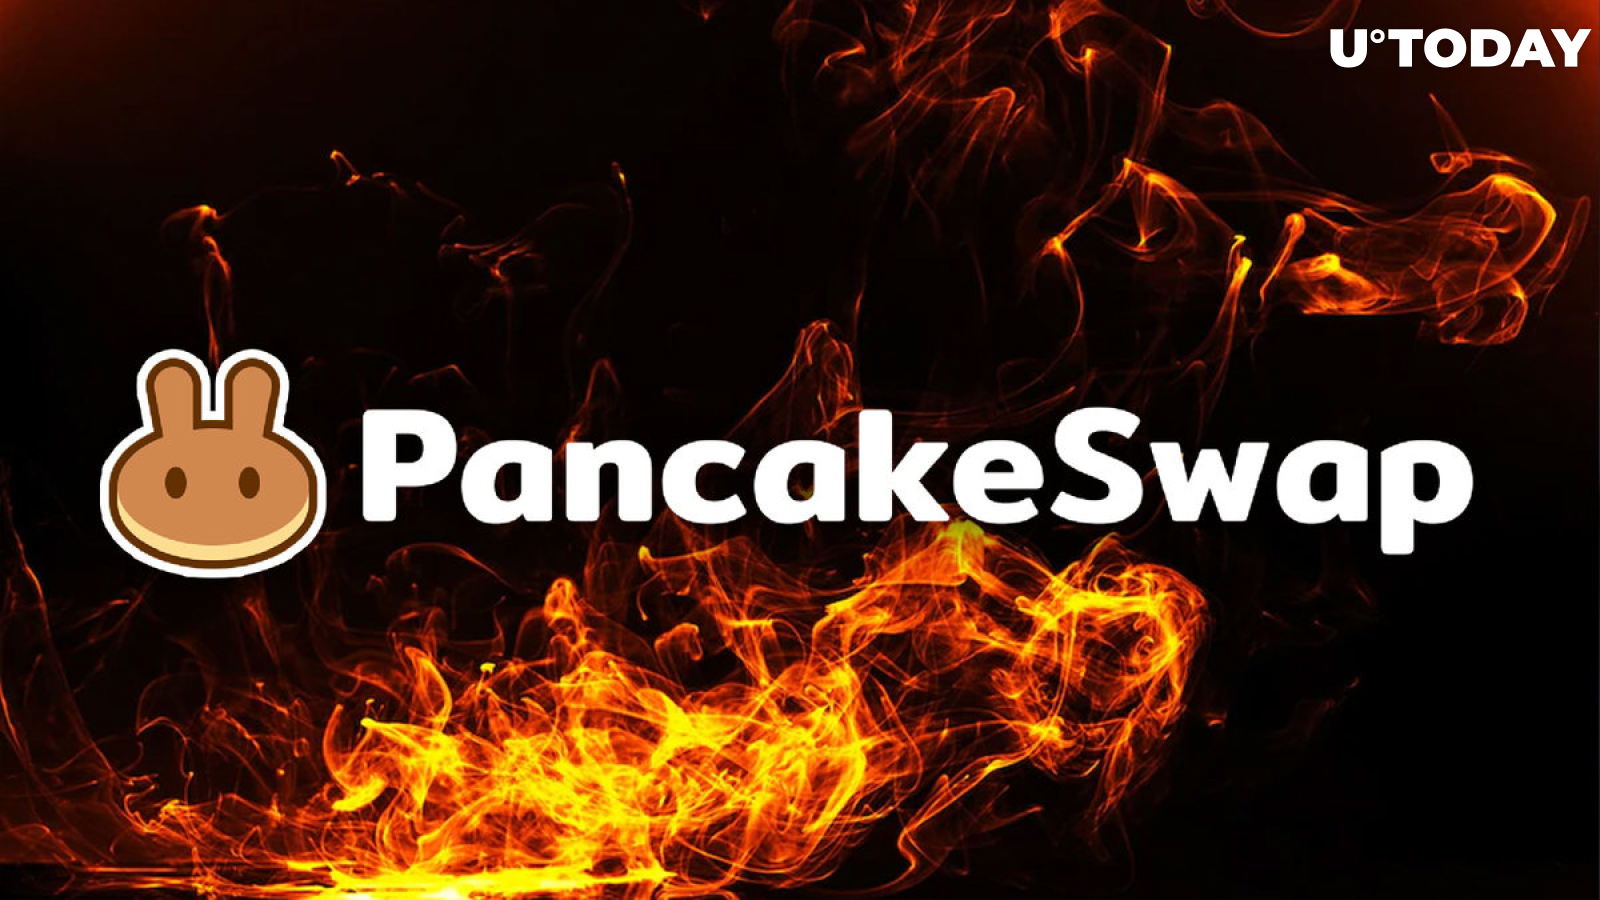 PancakeSwap Burns $28 Million Worth of CAKE, Price Shows Positive